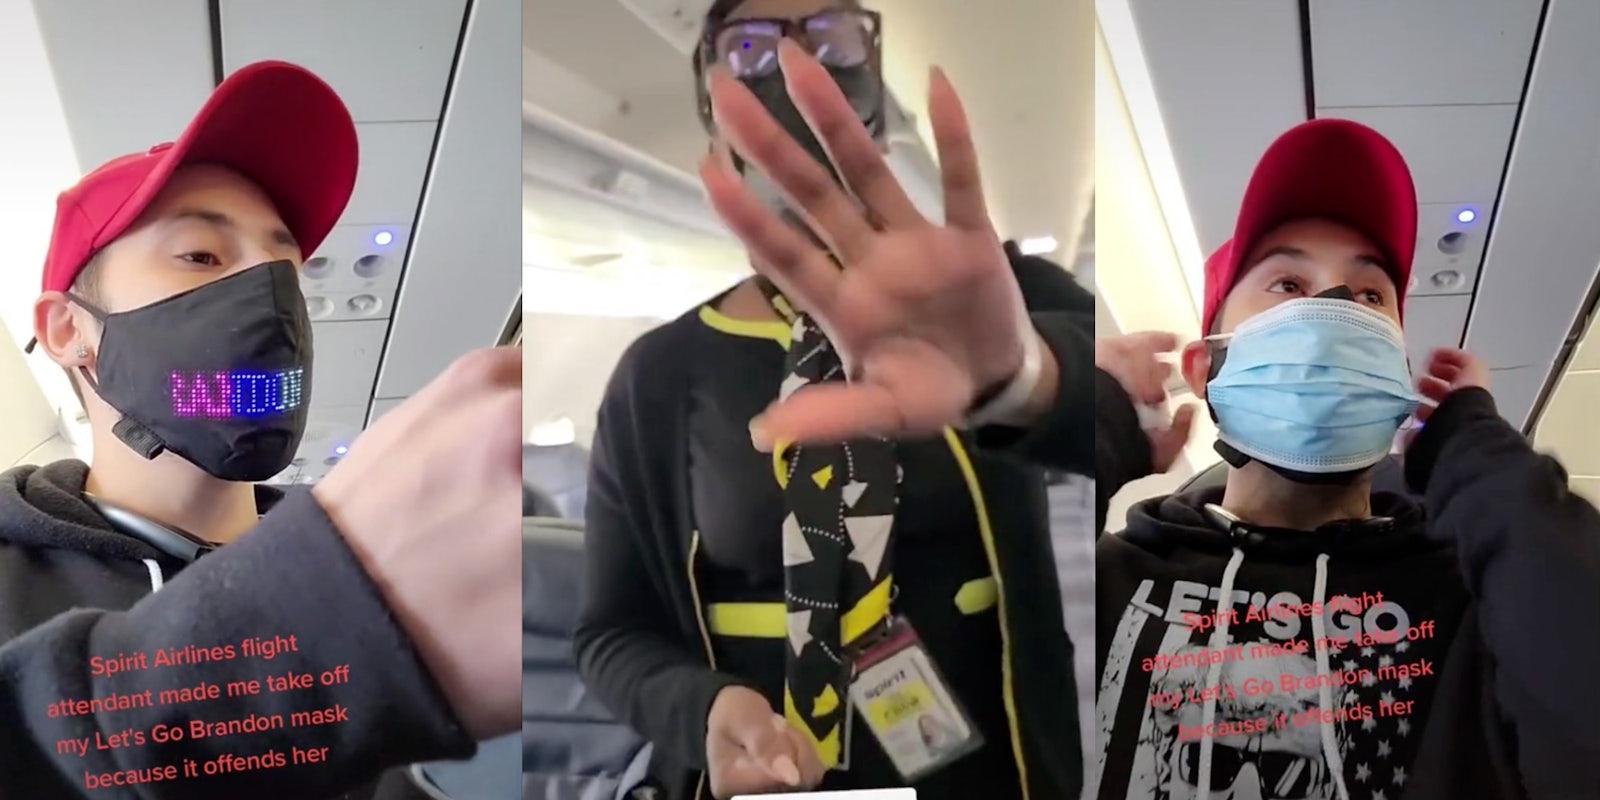 Man Says Spirit Airlines Made Him Take Off 'Let's Go Brandon' Mask